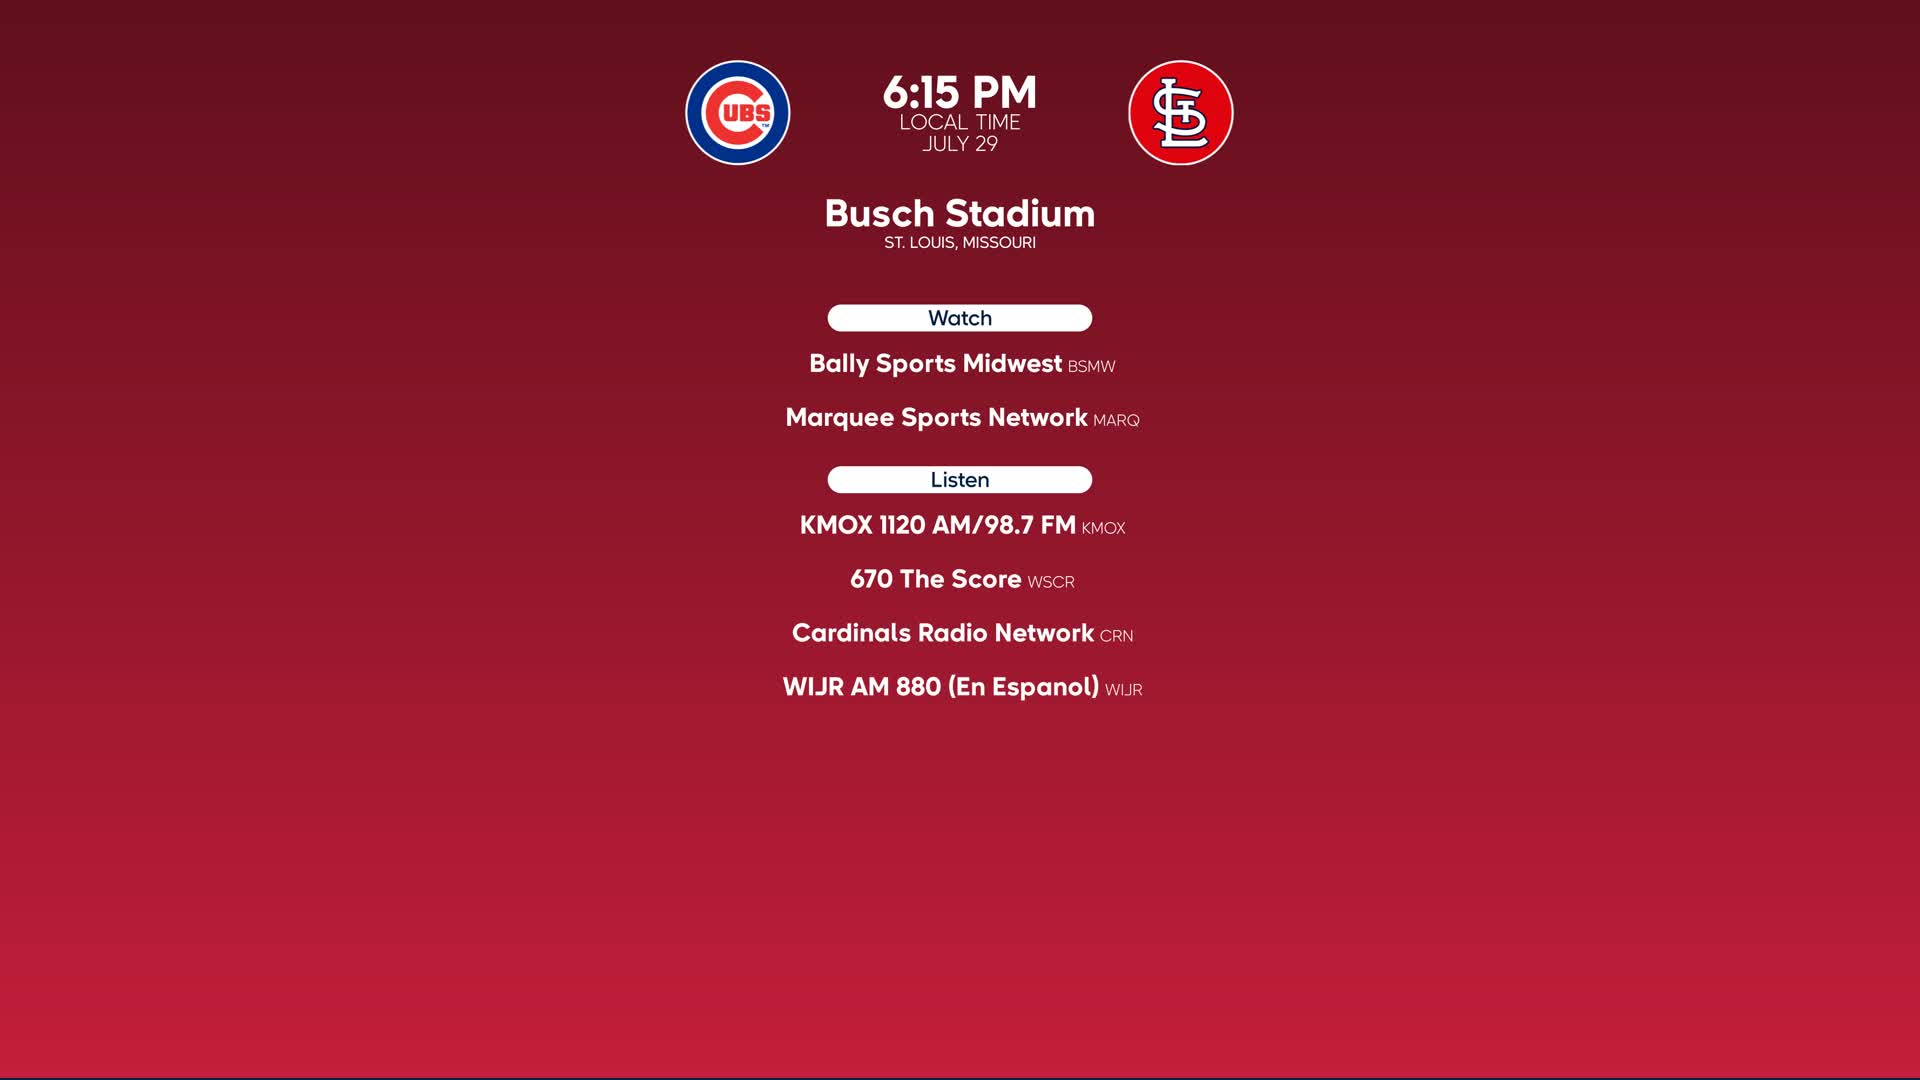 Chicago Cubs vs. St. Louis Cardinals preview, Saturday 7/29, 6:15